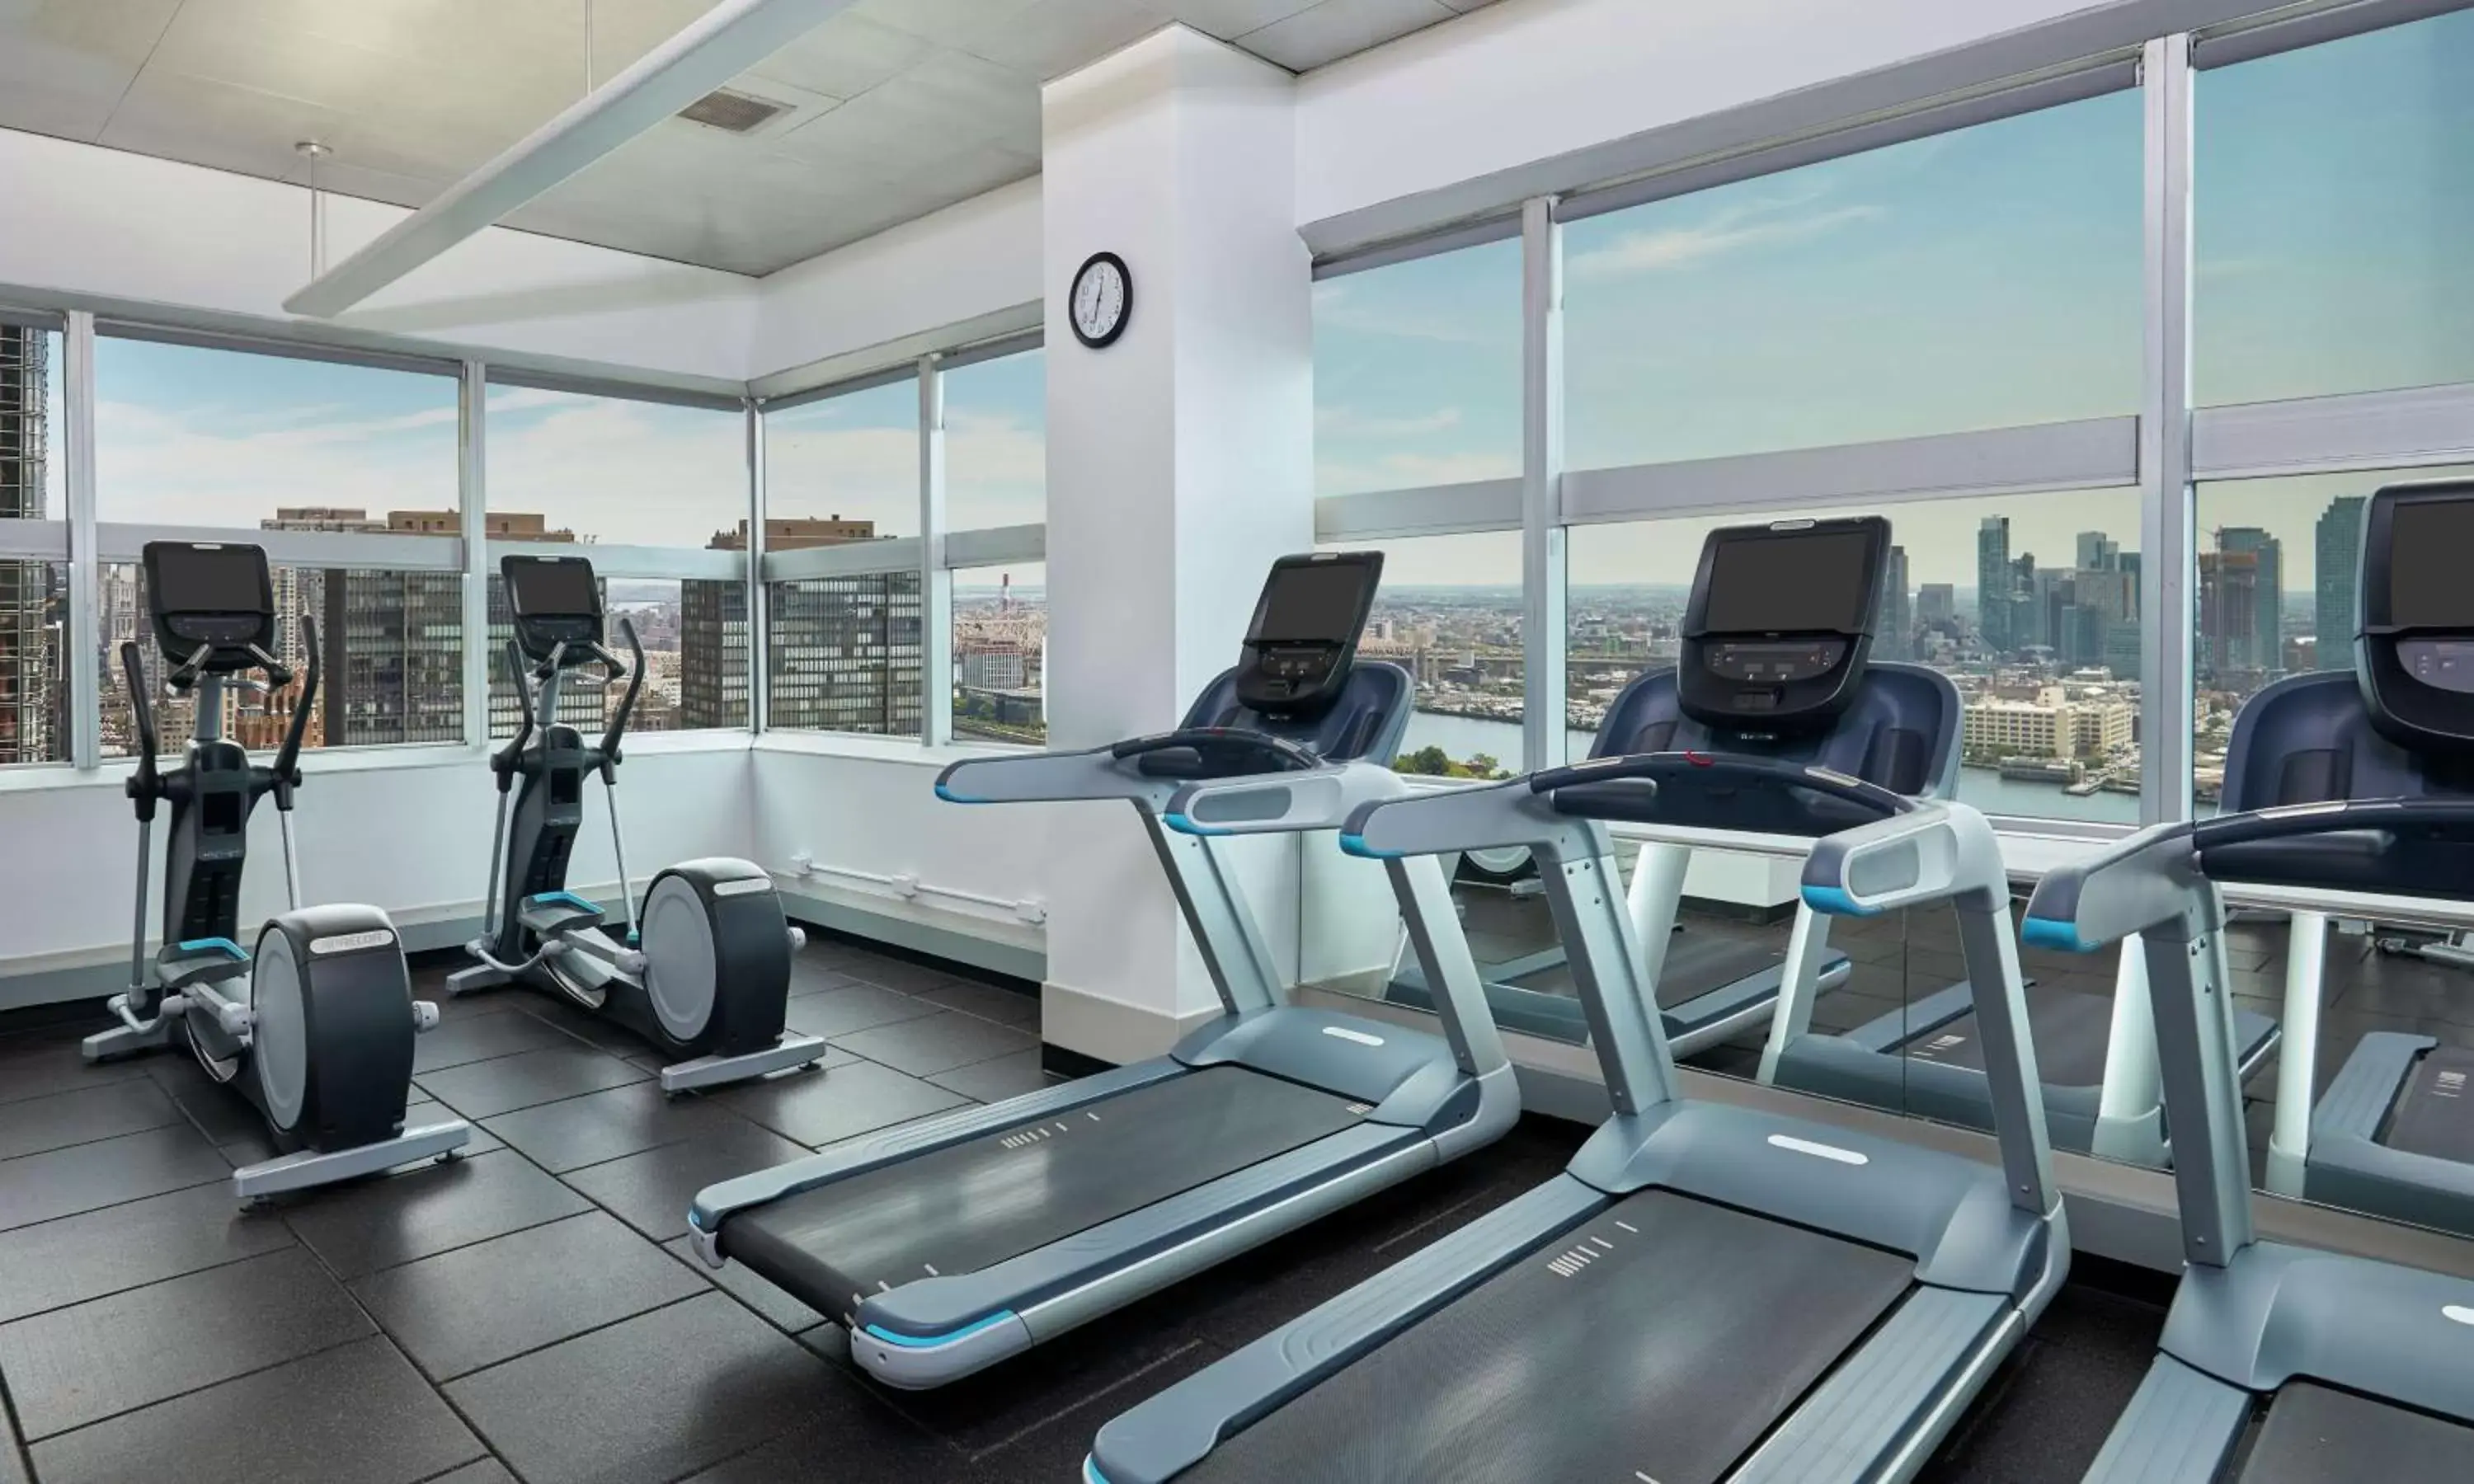 Fitness centre/facilities, Fitness Center/Facilities in Millennium Hilton New York One UN Plaza